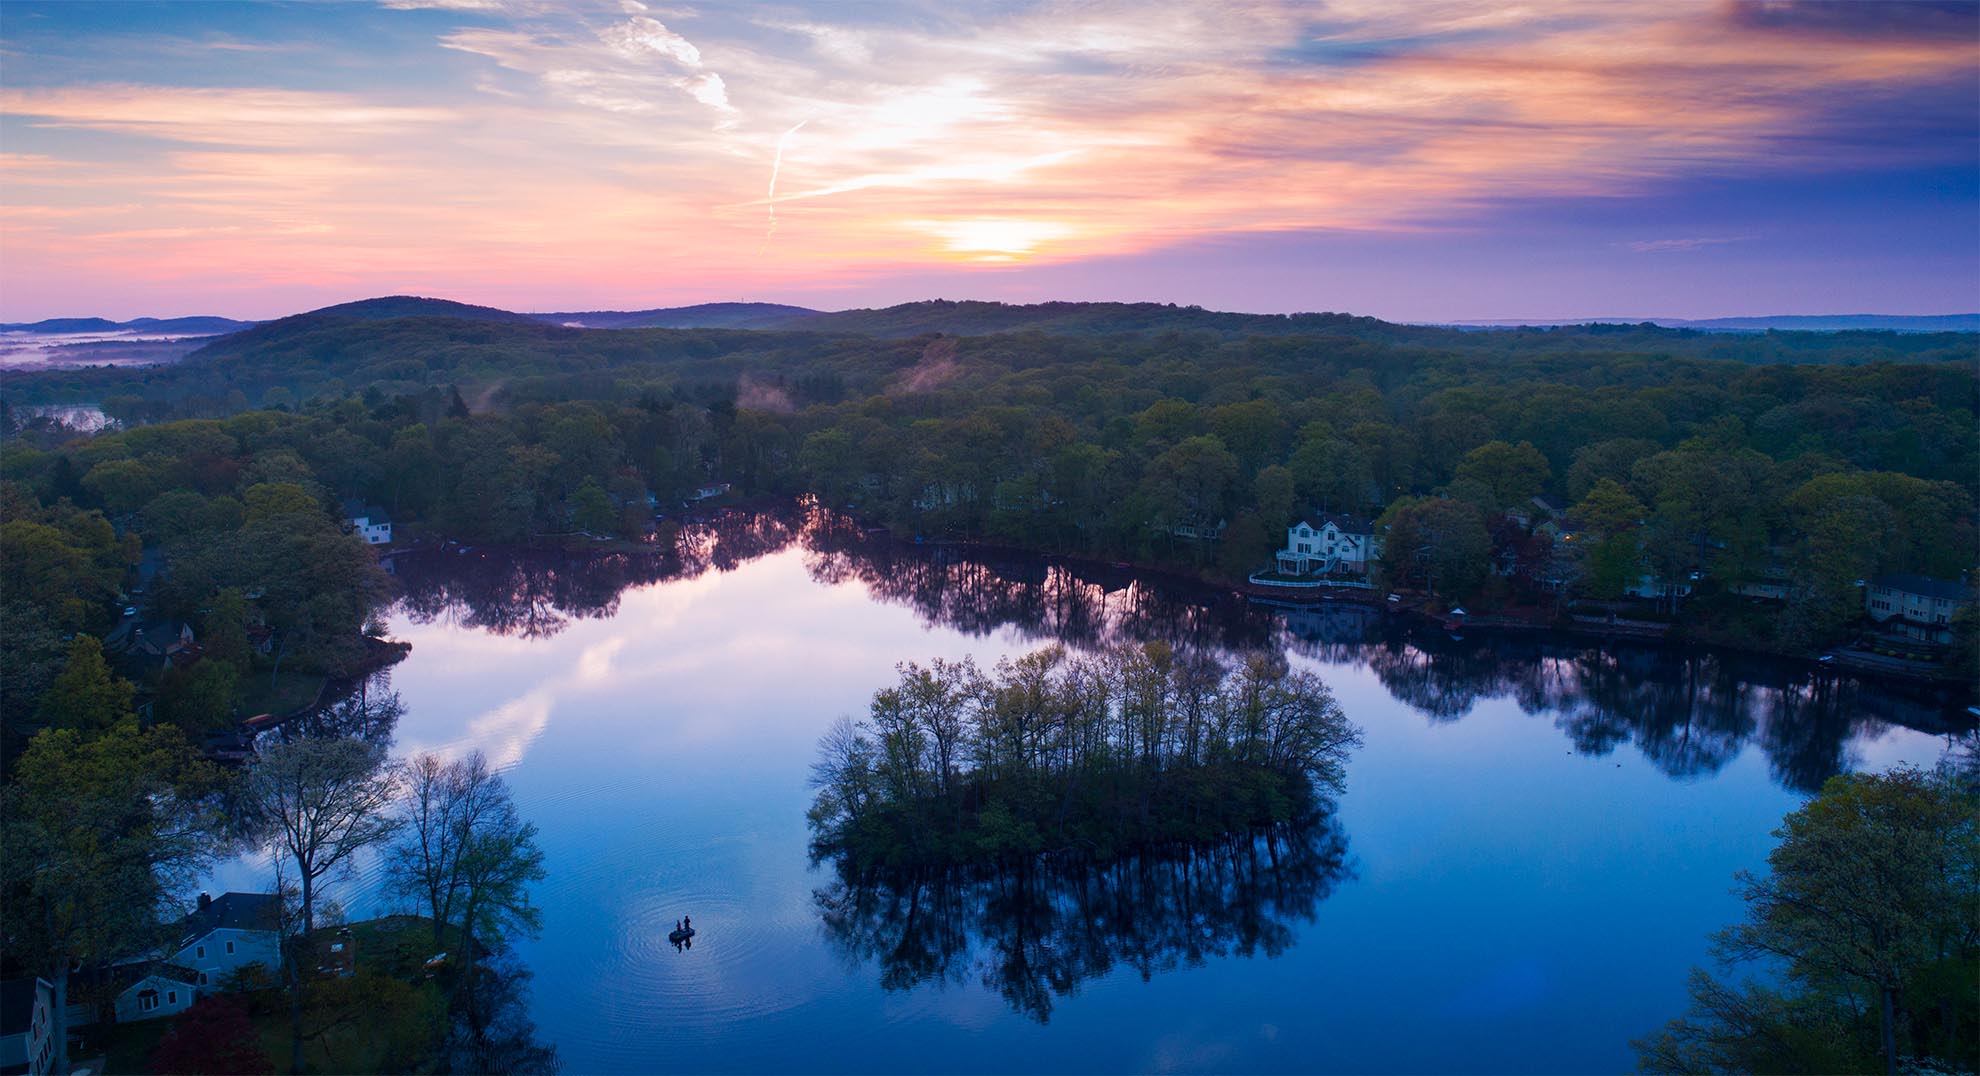 Photograph of sunrise over Lake Arrowhead NJ taken with a drone